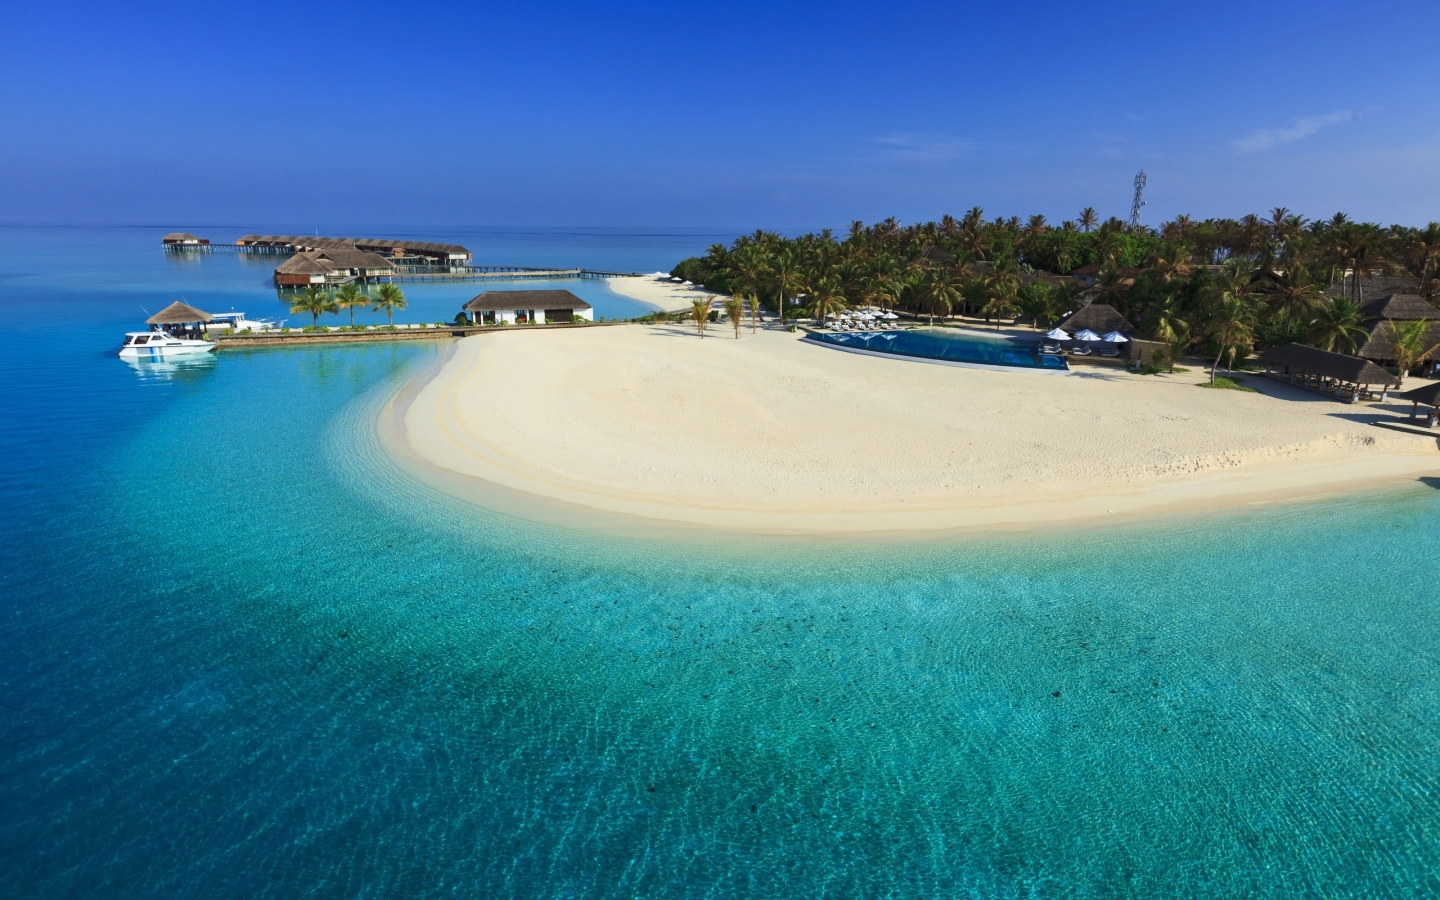 Maldives Luxury Resort for 1440 x 900 widescreen resolution